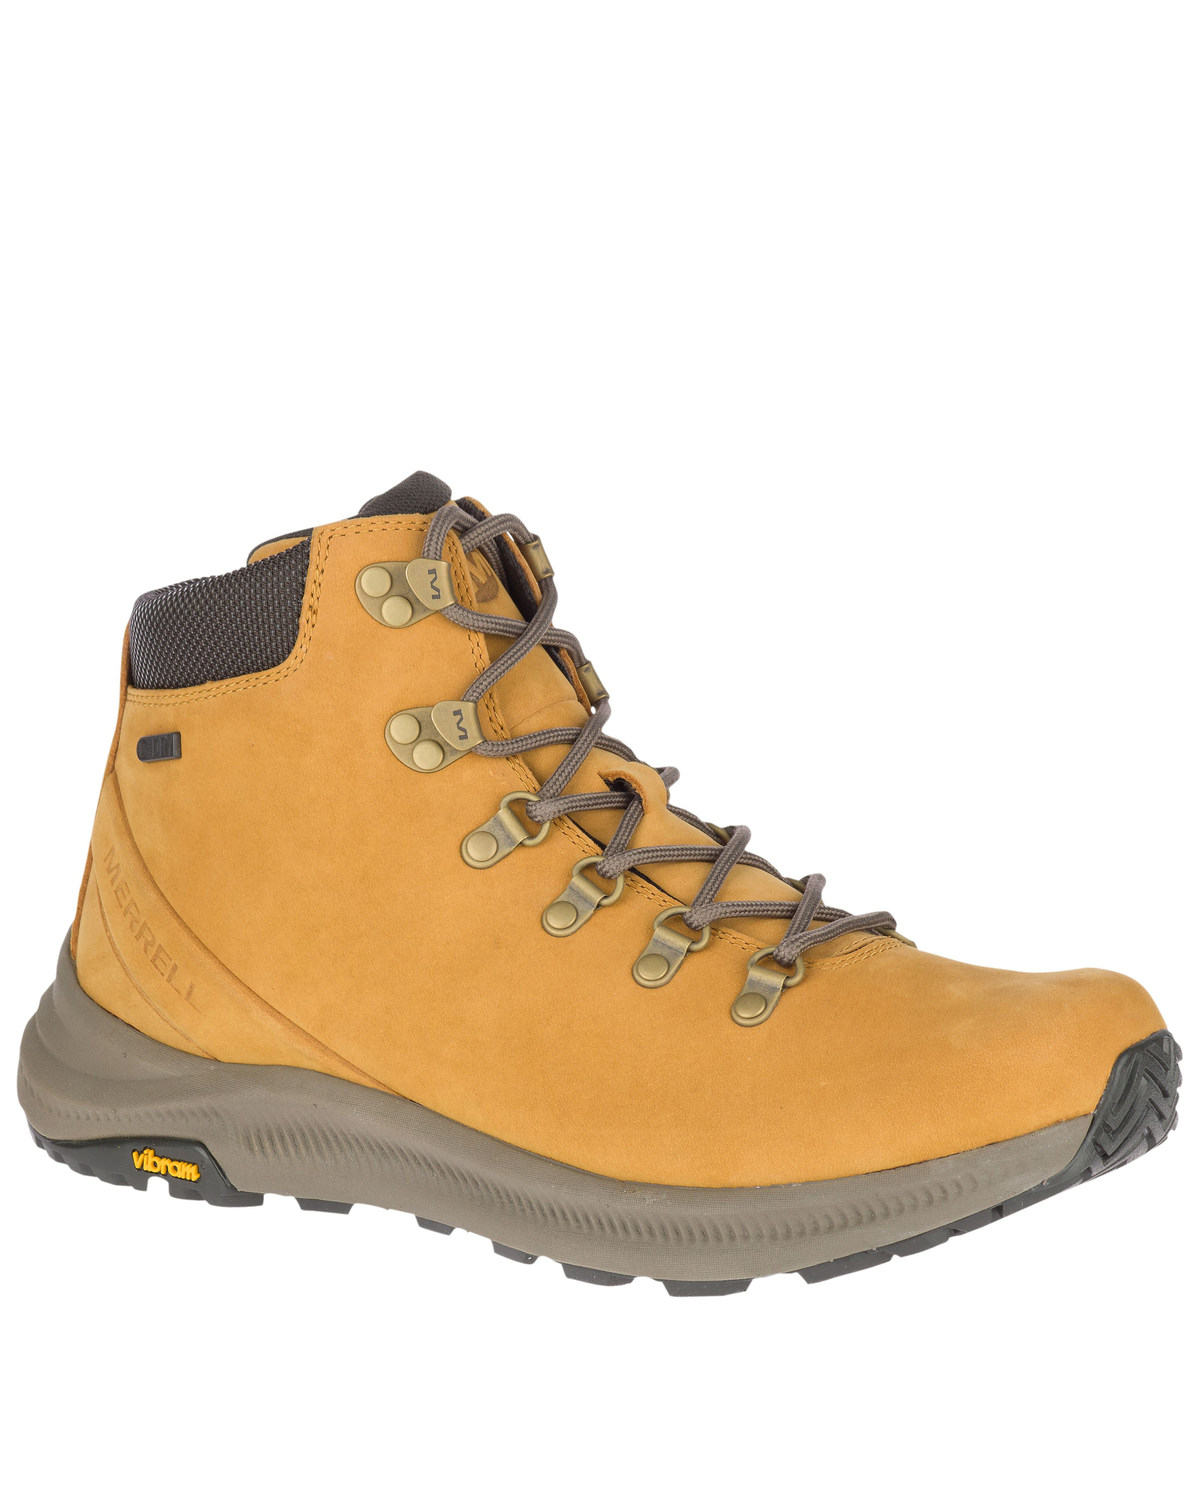 Merrell Men's Tan Ontario Waterproof Hiking Boots - Soft Toe